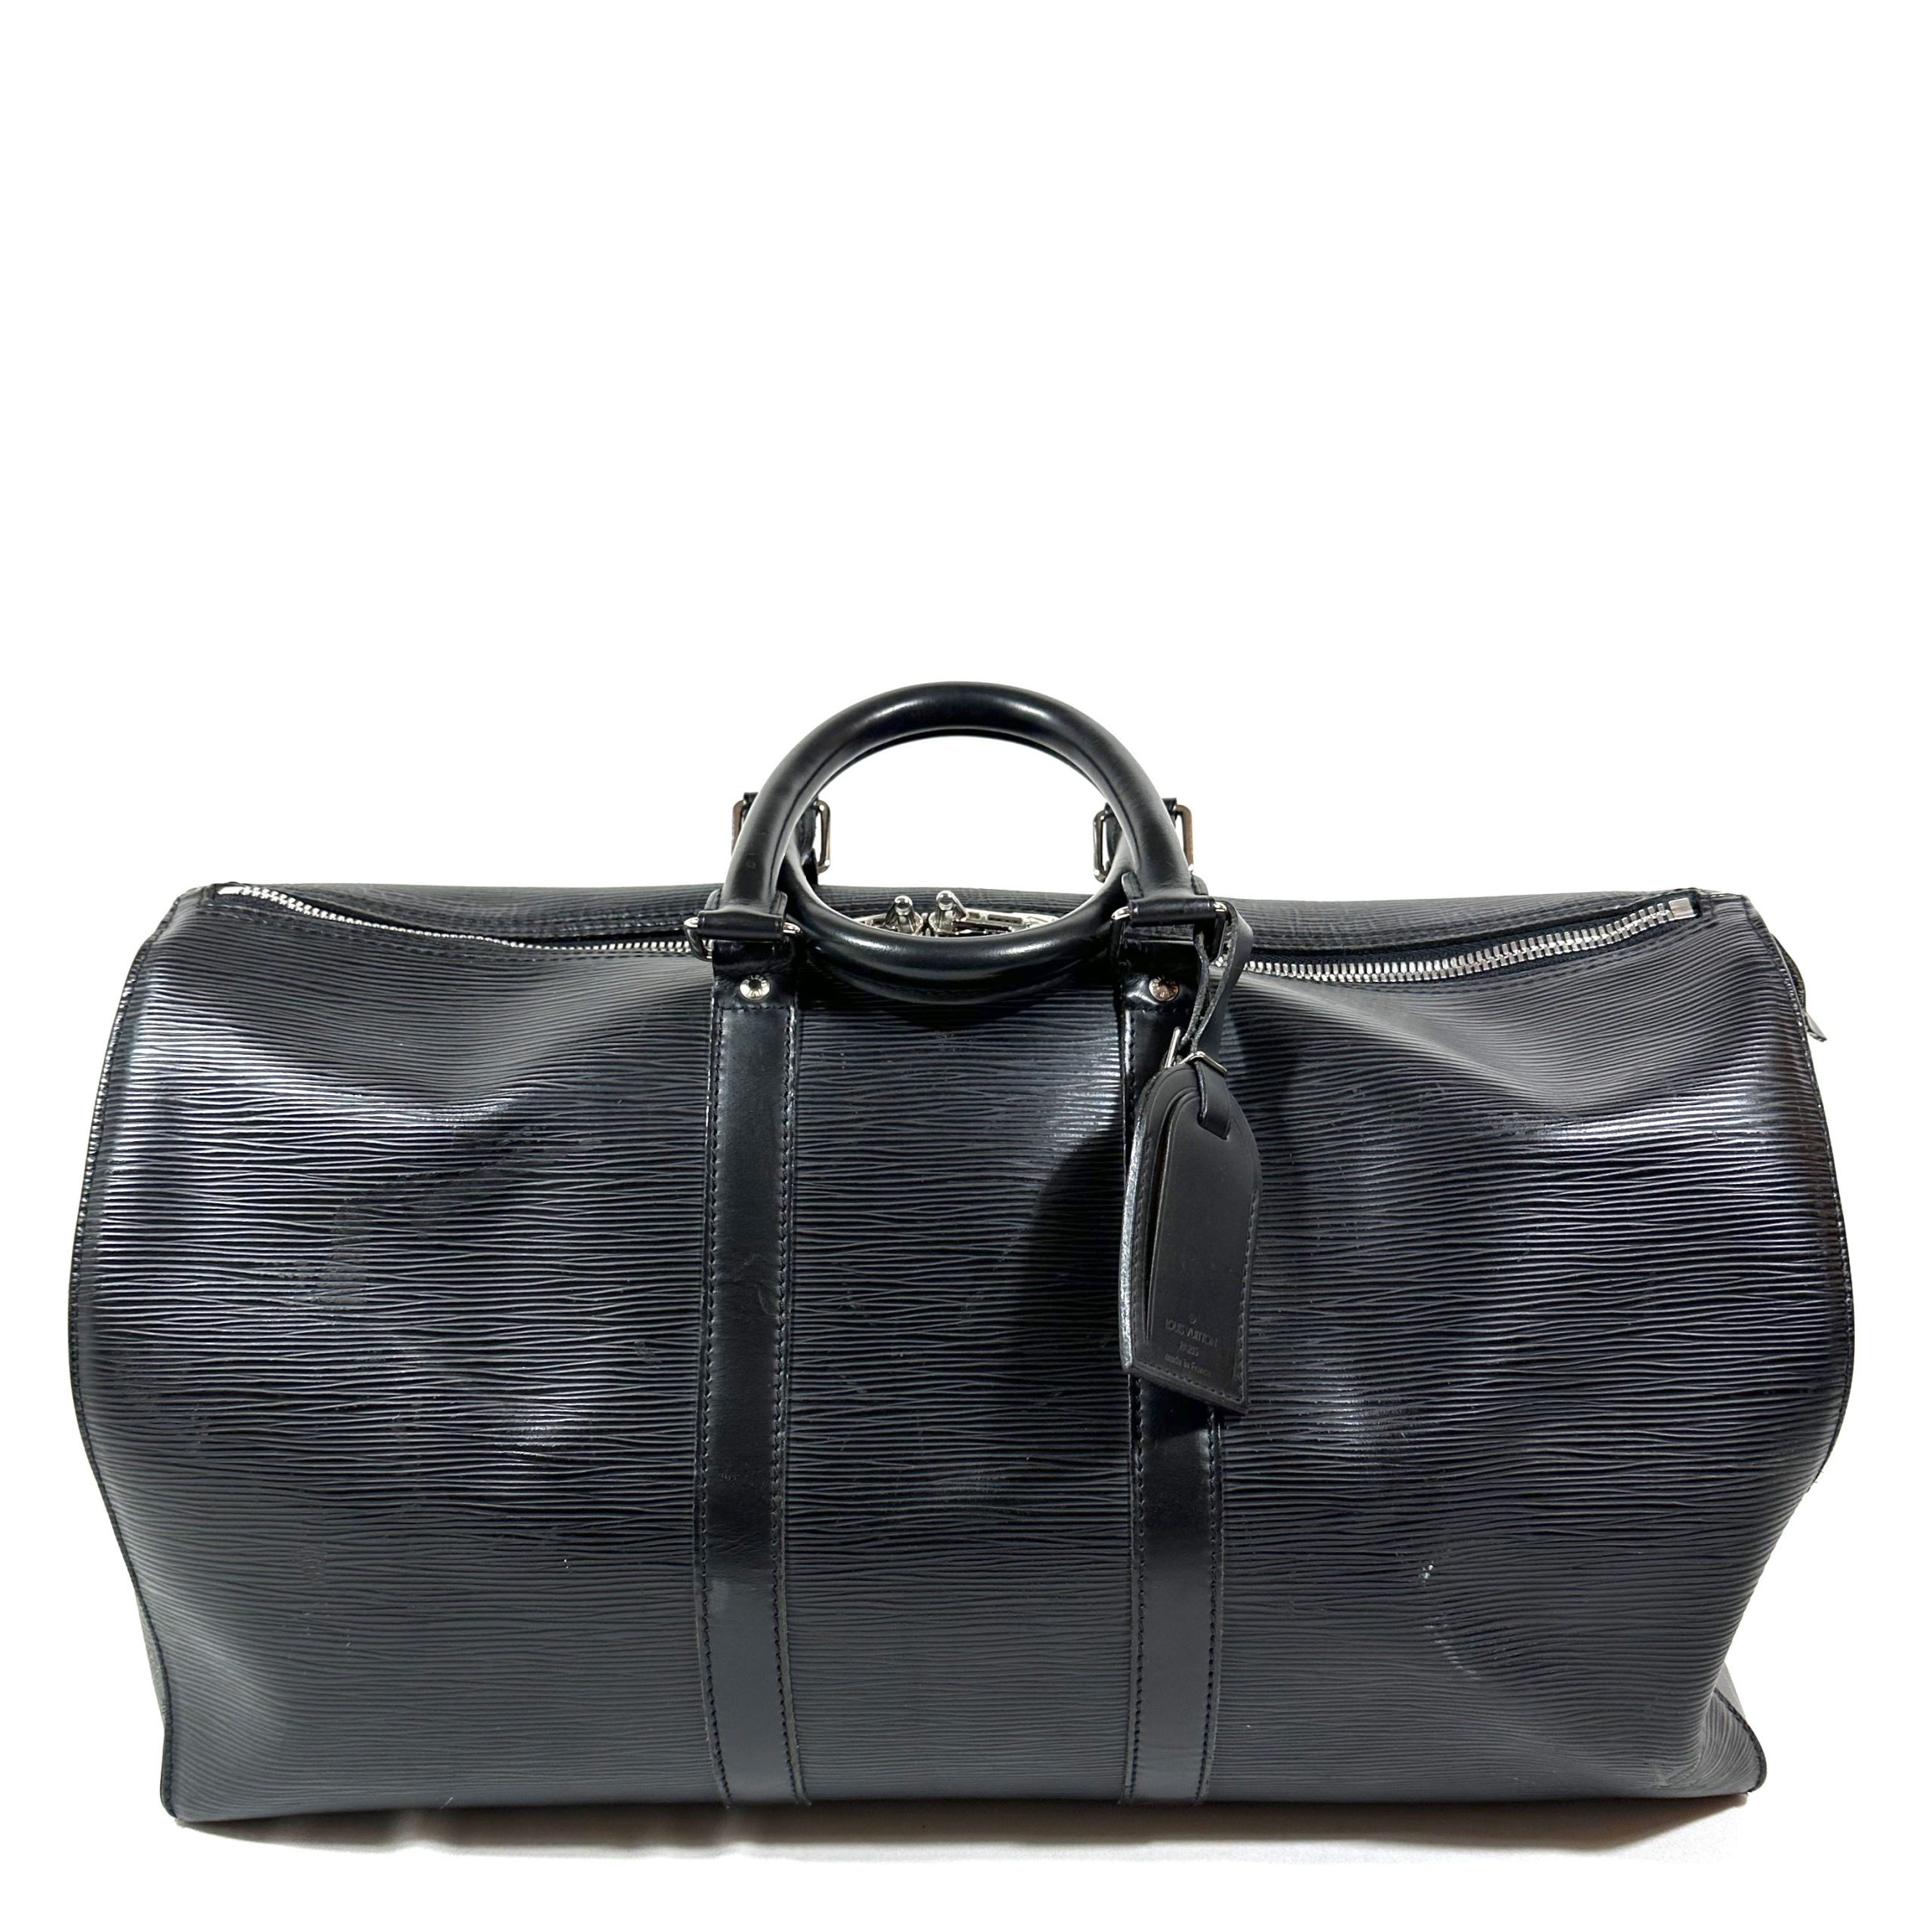 Mudono Small Crossbody Bag for Women Genuine Leather Clutch Purse Vintage  Phone Bag with Detachable Wrist and Shoulder Straps: Handbags: Amazon.com